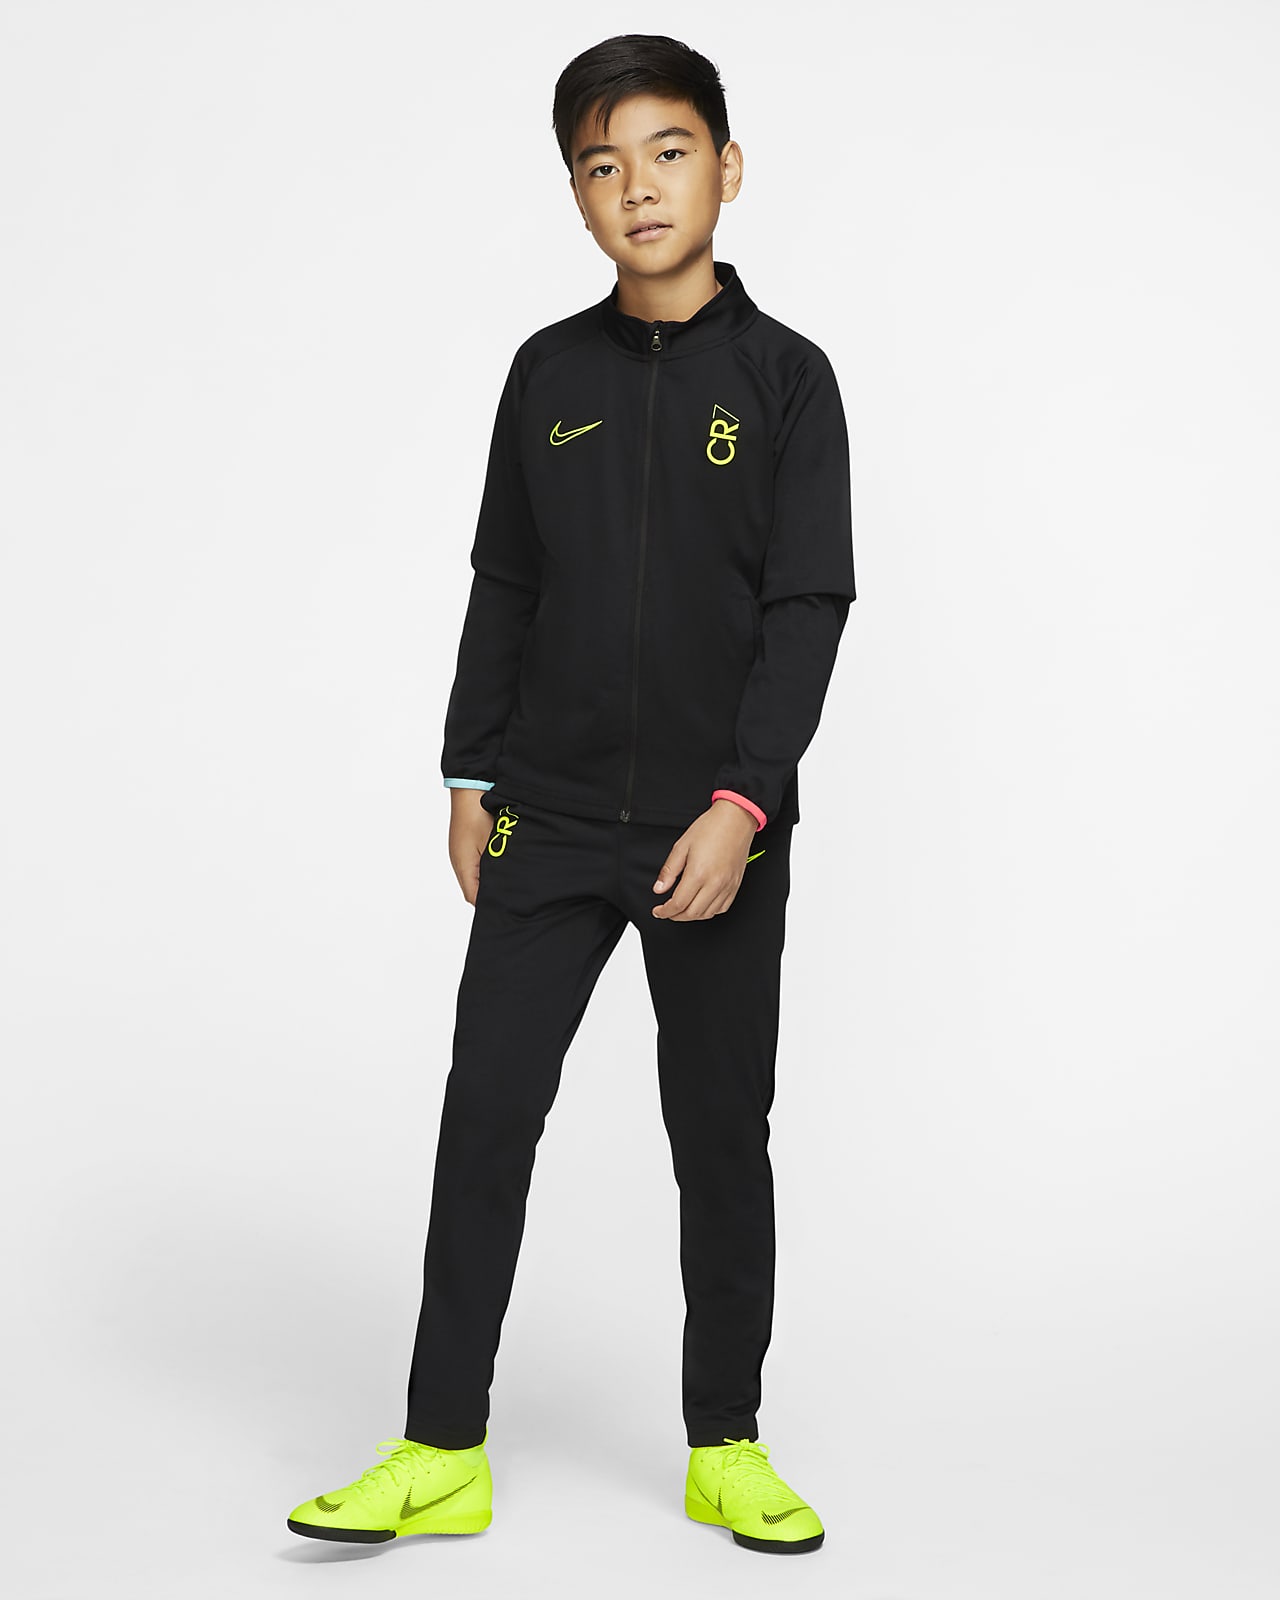 Cristiano Ronaldo #7 Kids Soccer Tracksuit Track Jacket with Pants Youth Sizes